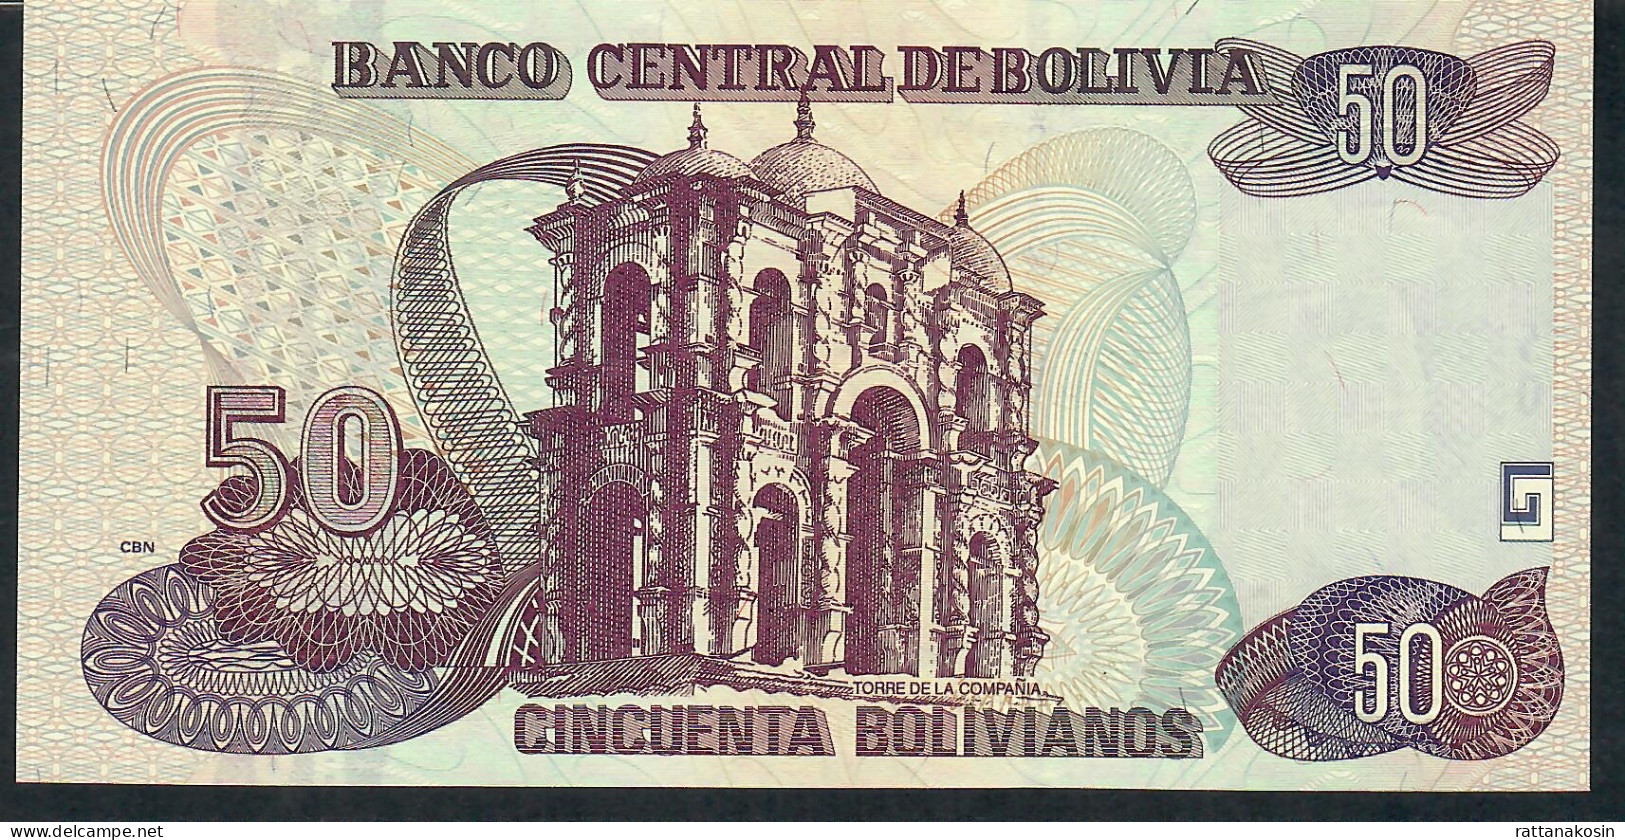 BOLIVIA P240 50 BOLIVIANOS  2011 Suffix I Signature 90  UNC. - Bolivia